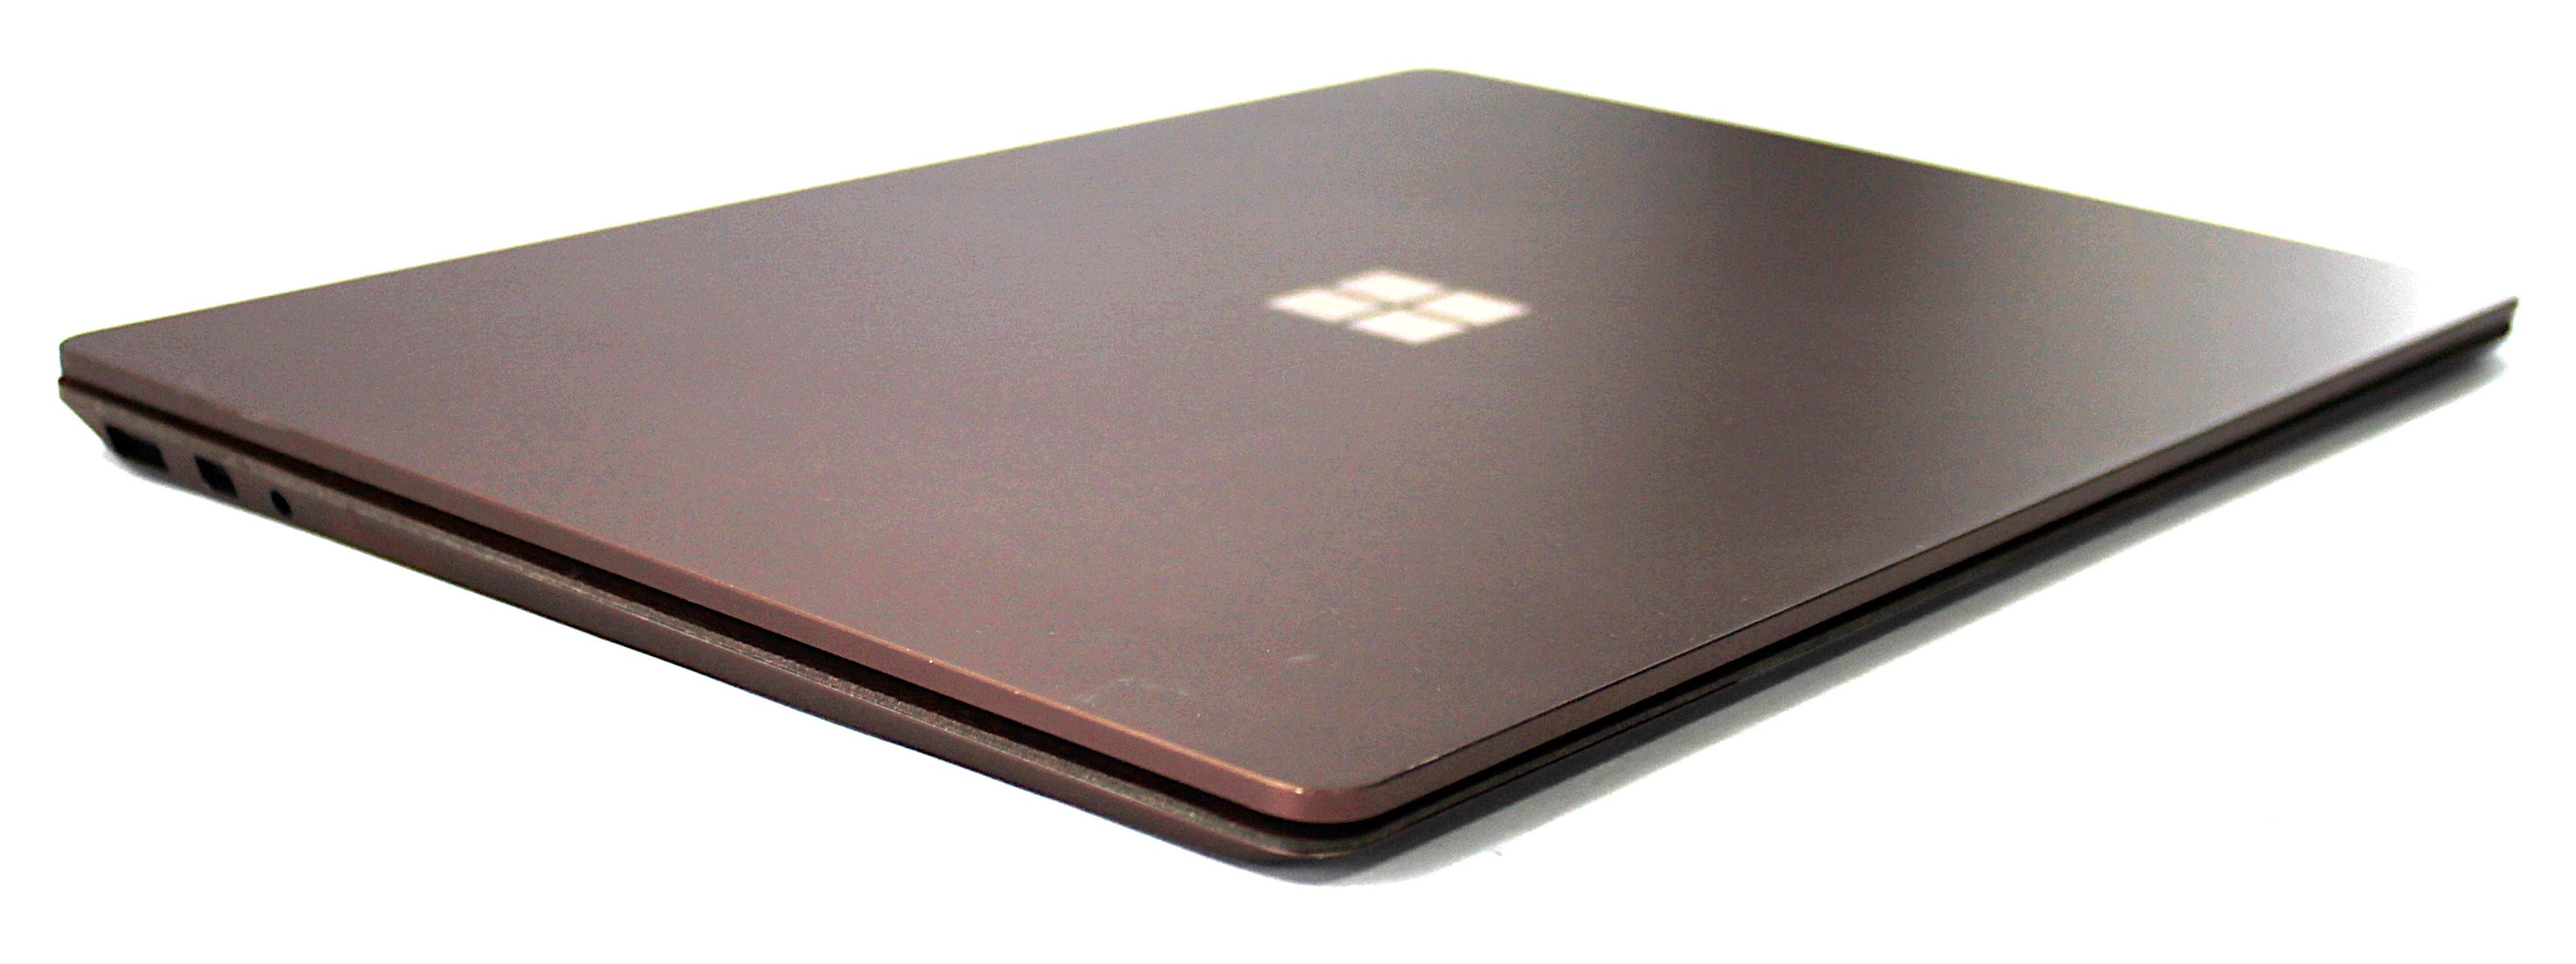 Microsoft Surface Laptop, 13" Intel Core i5, 8GB RAM, 256GB eMMC